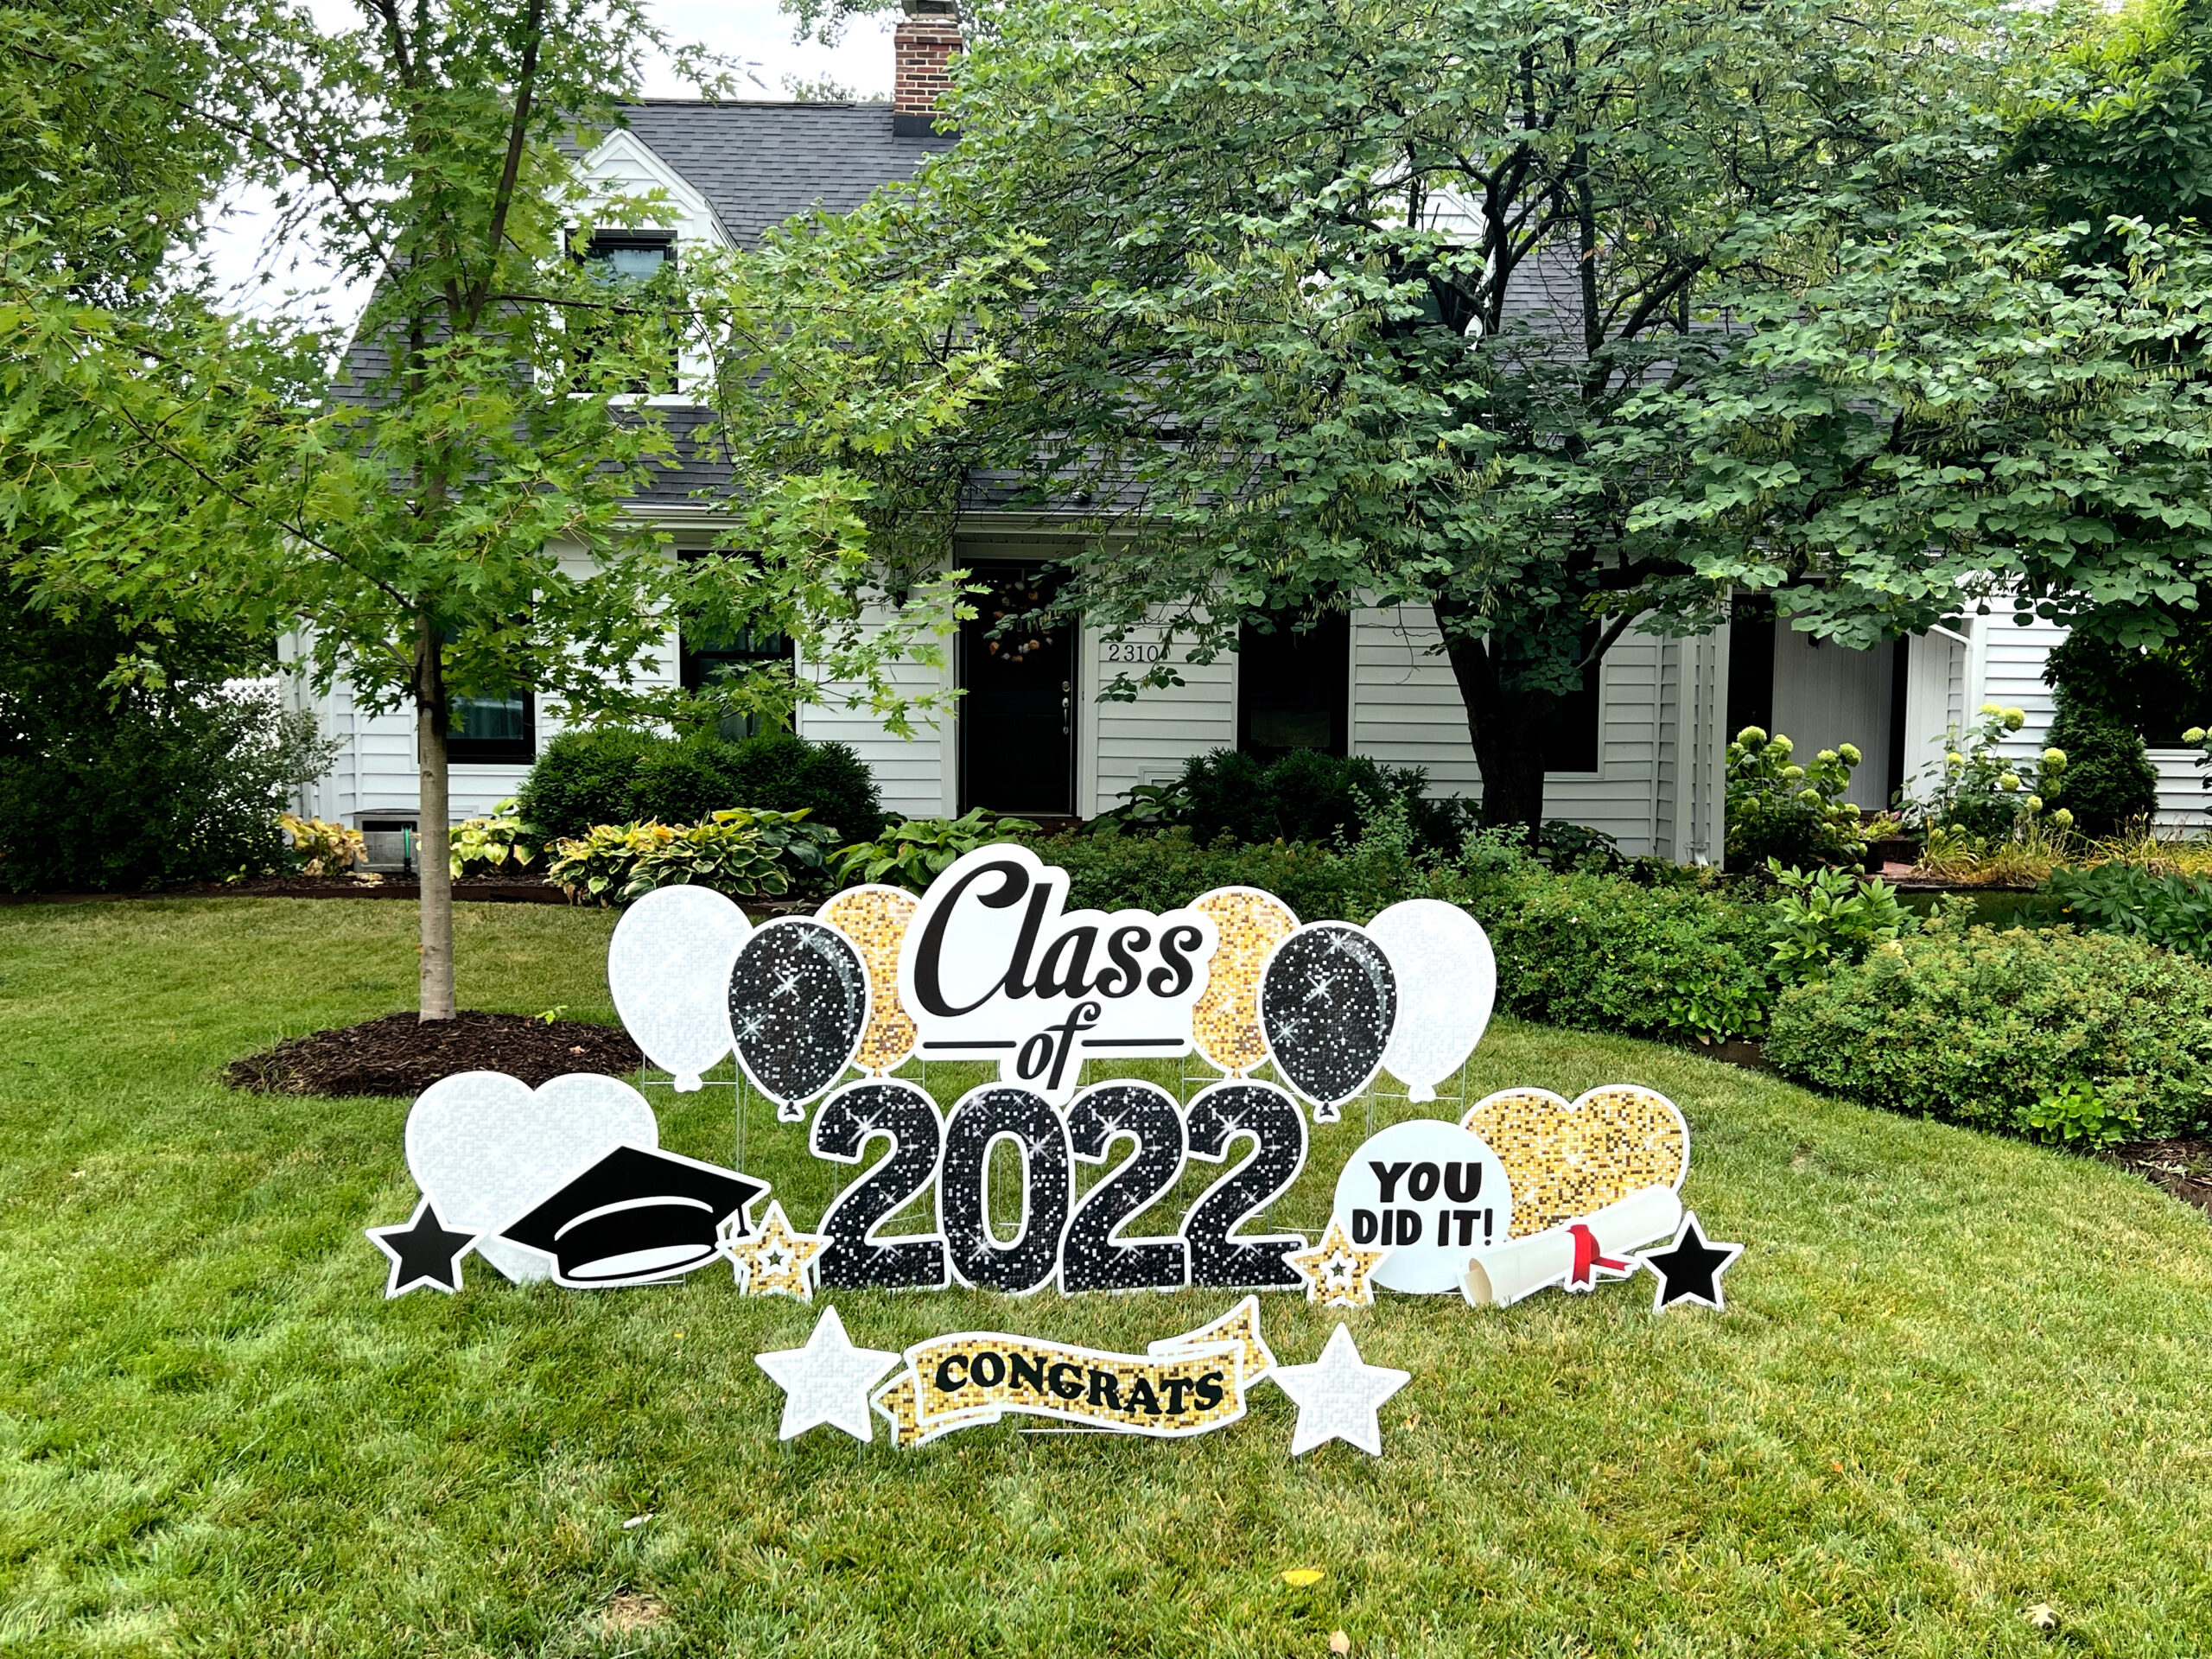 Class of 2022 Congrats yard signs